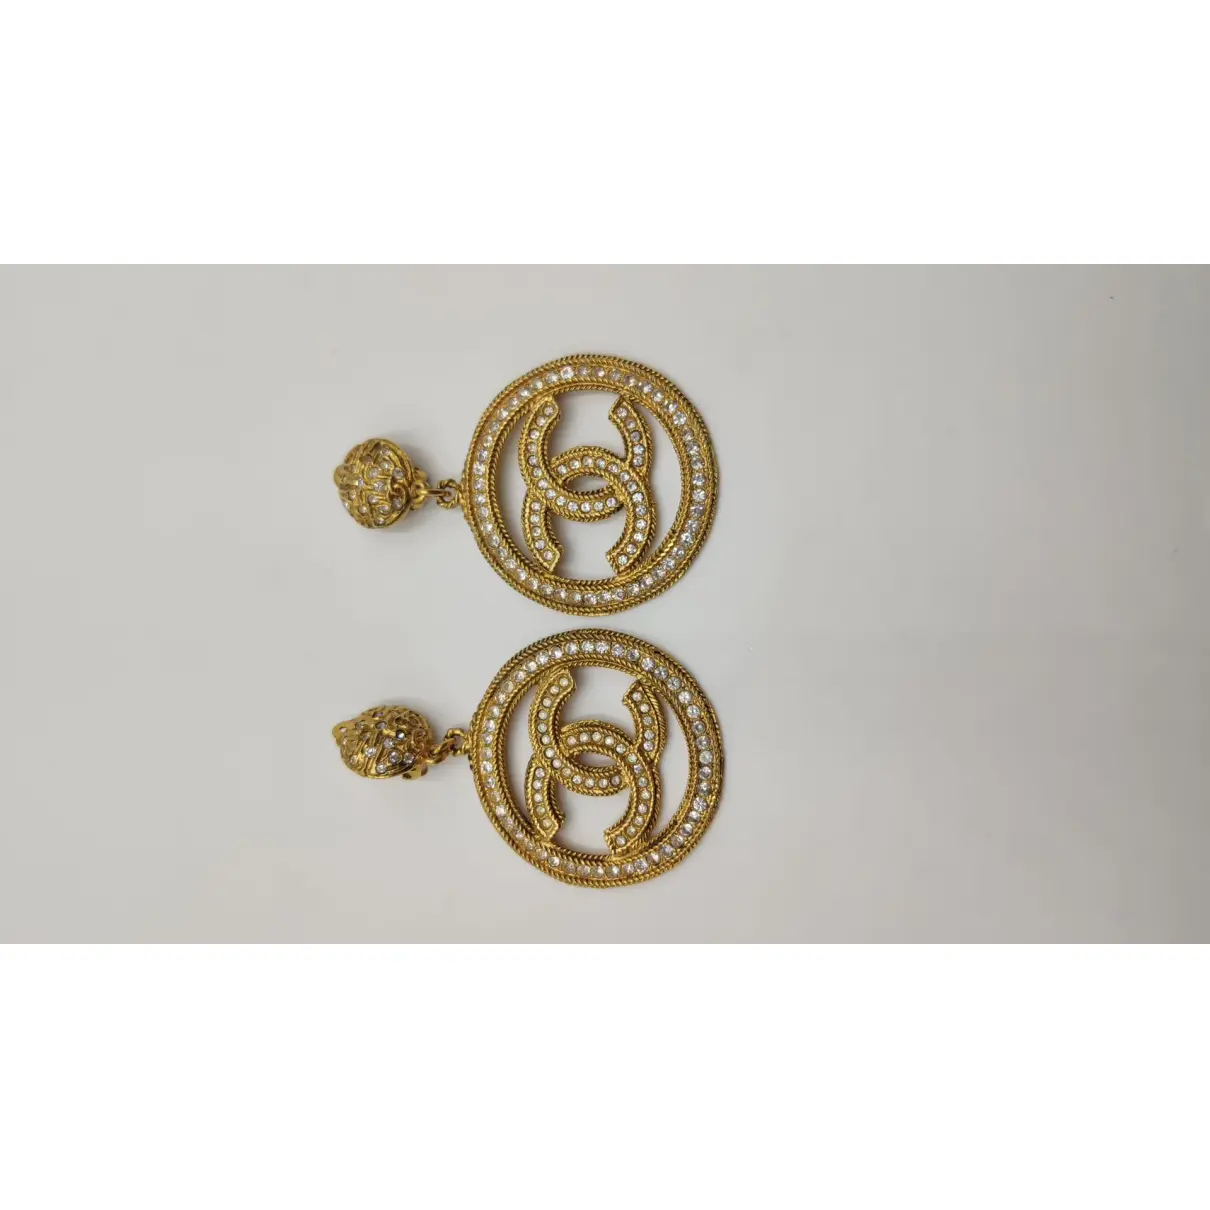 Buy Chanel CC earrings online - Vintage